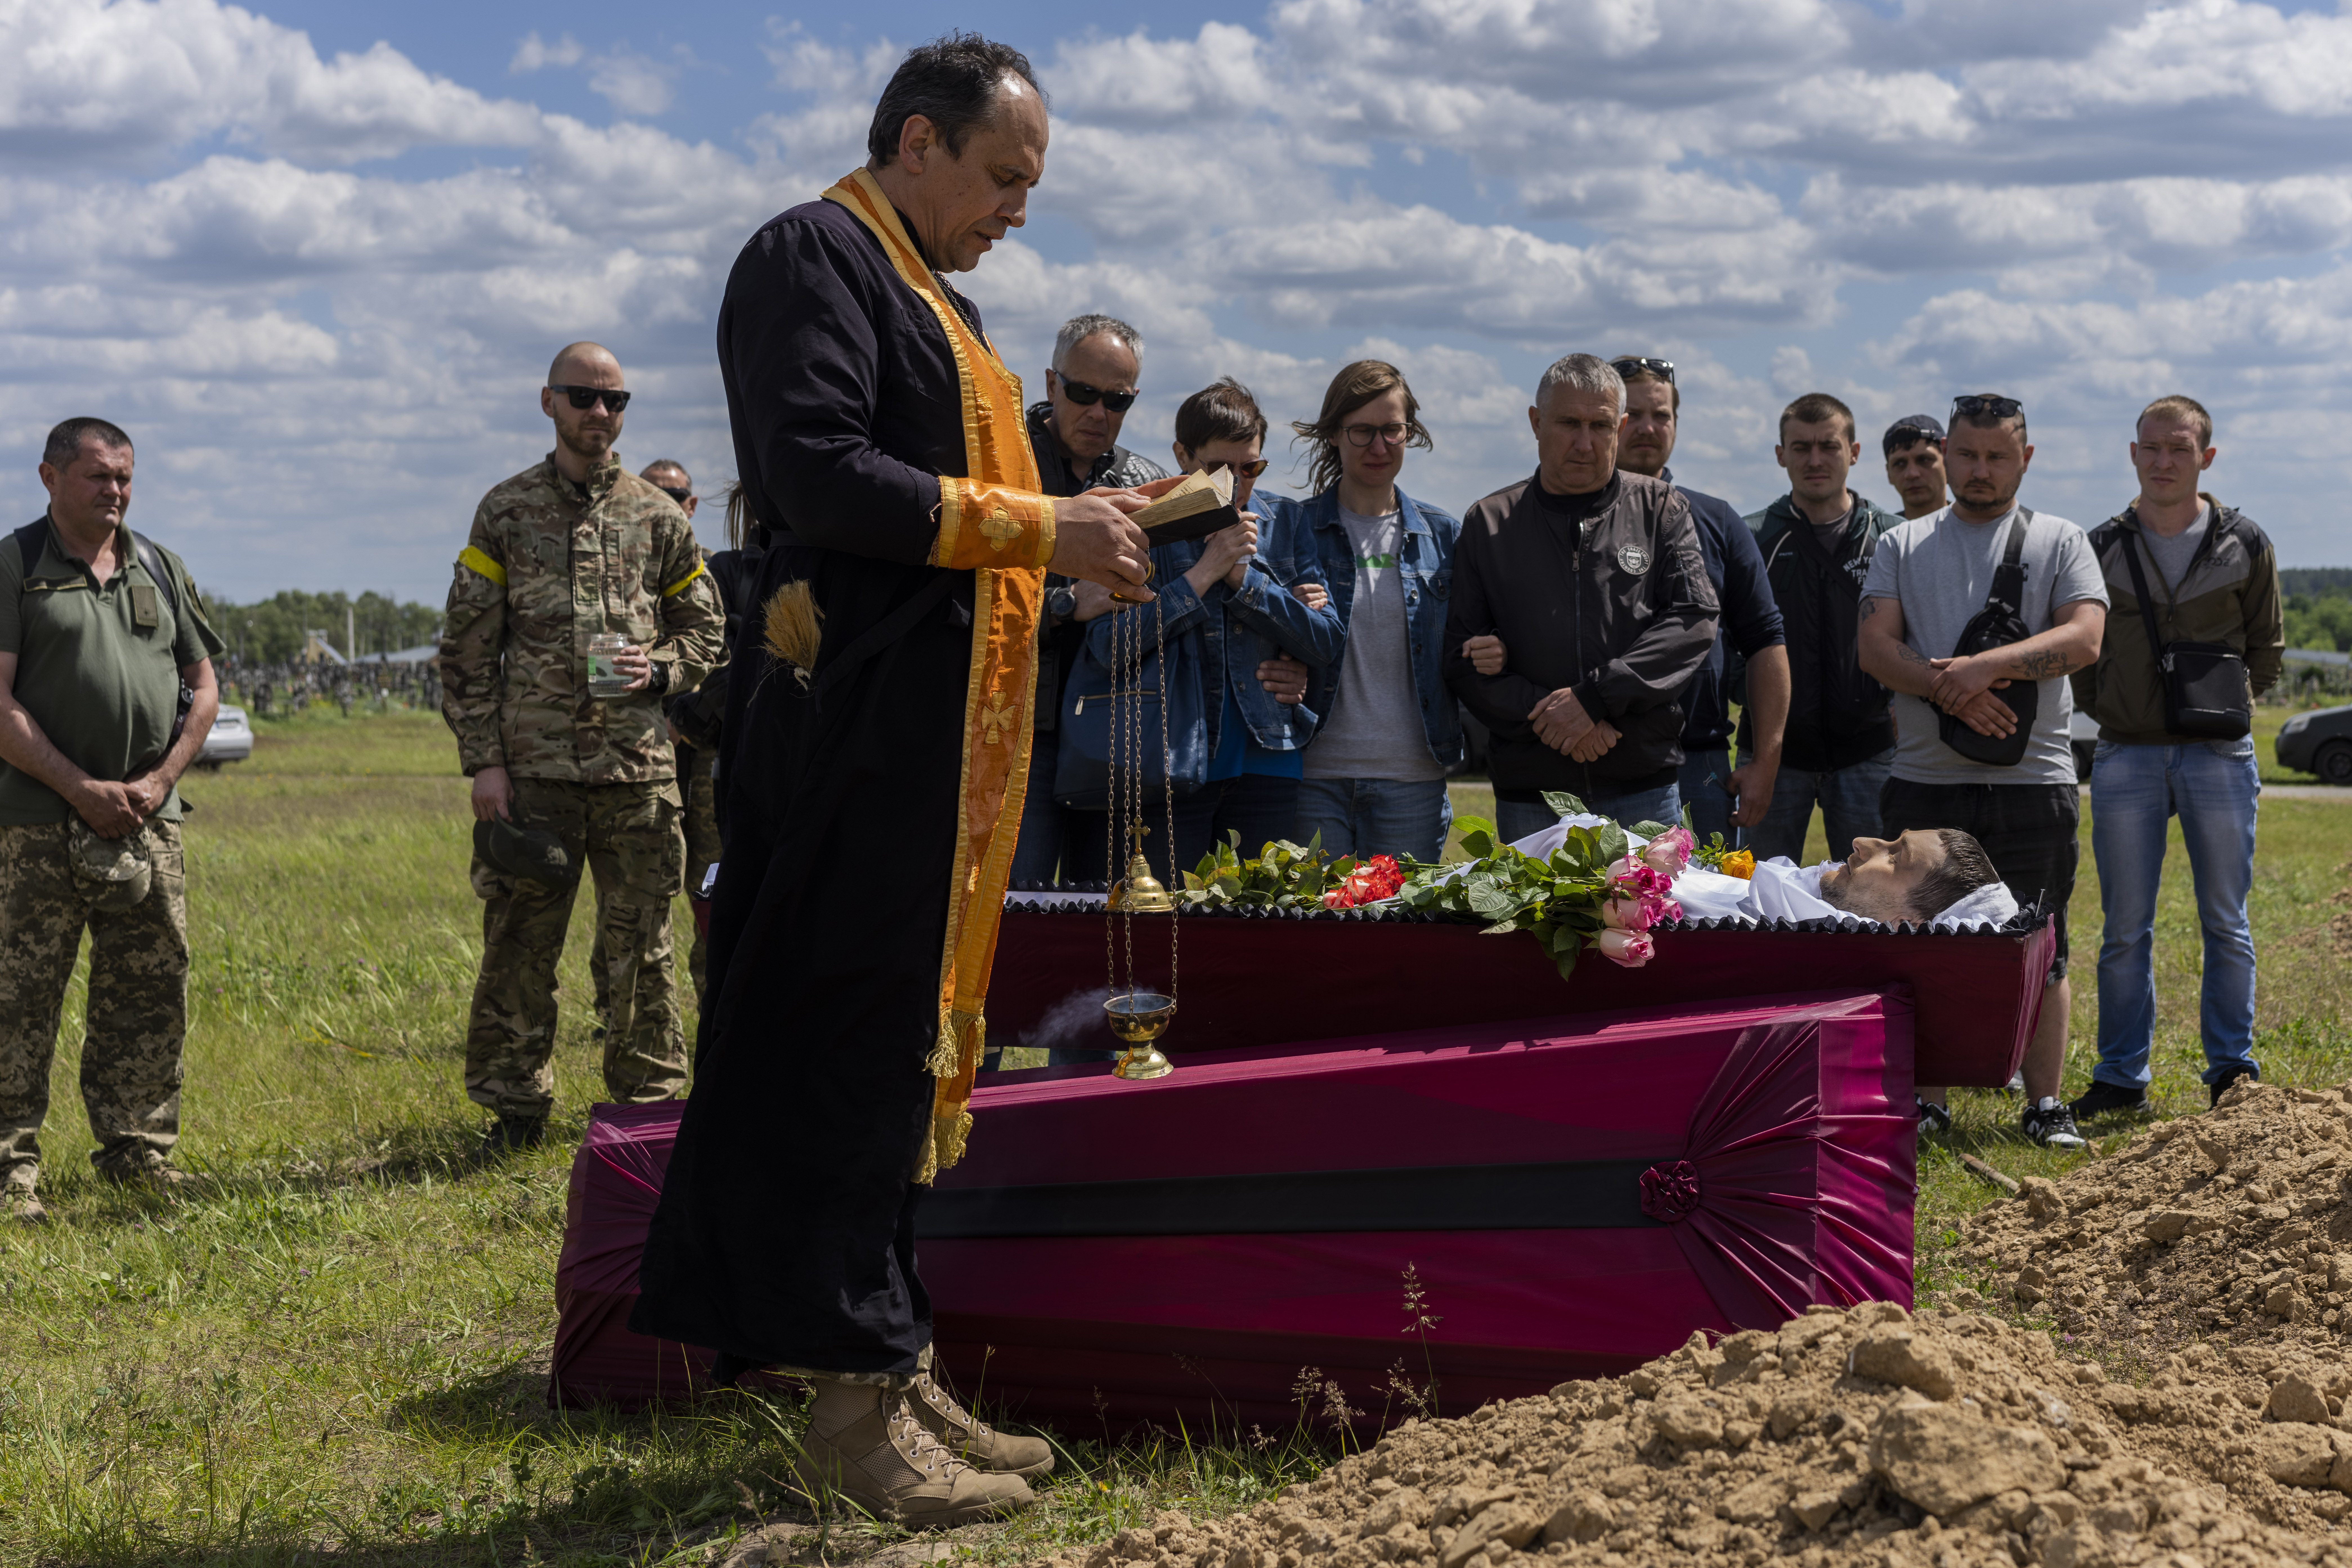 Relatives and friends attend the funeral of Ukrainian serviceman Vitaliy Nejenits in Kharkiv cemetery, eastern Ukraine, Friday, May 27, 2022. (AP Photo/Bernat Armangue)